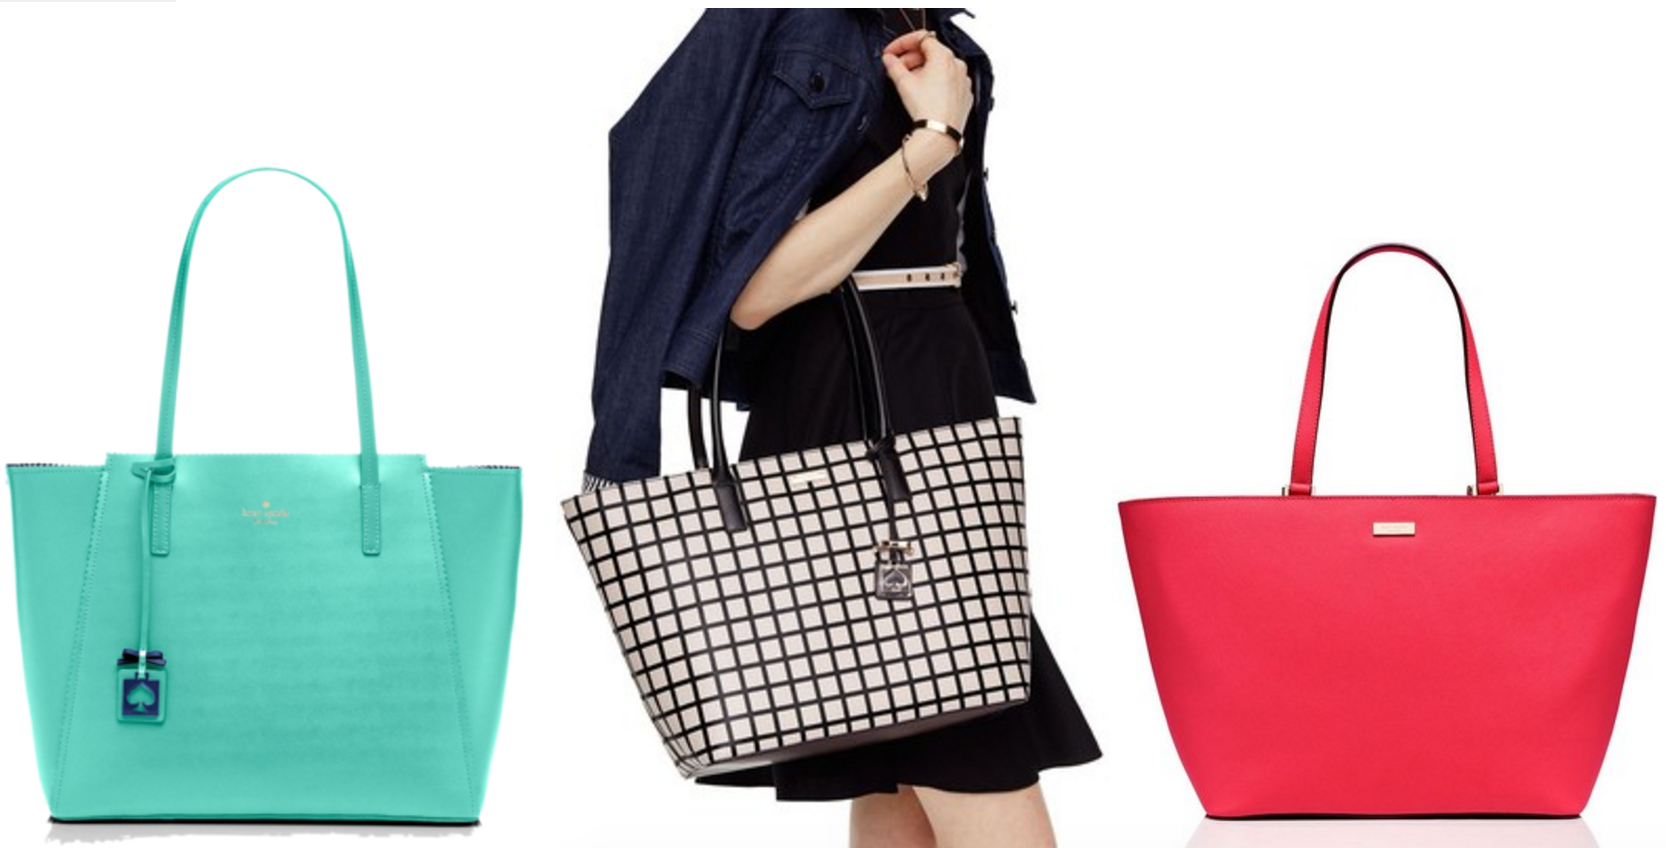 Kate Spade: Surprise Sale = 75% Off Handbags, Jewelry & More!